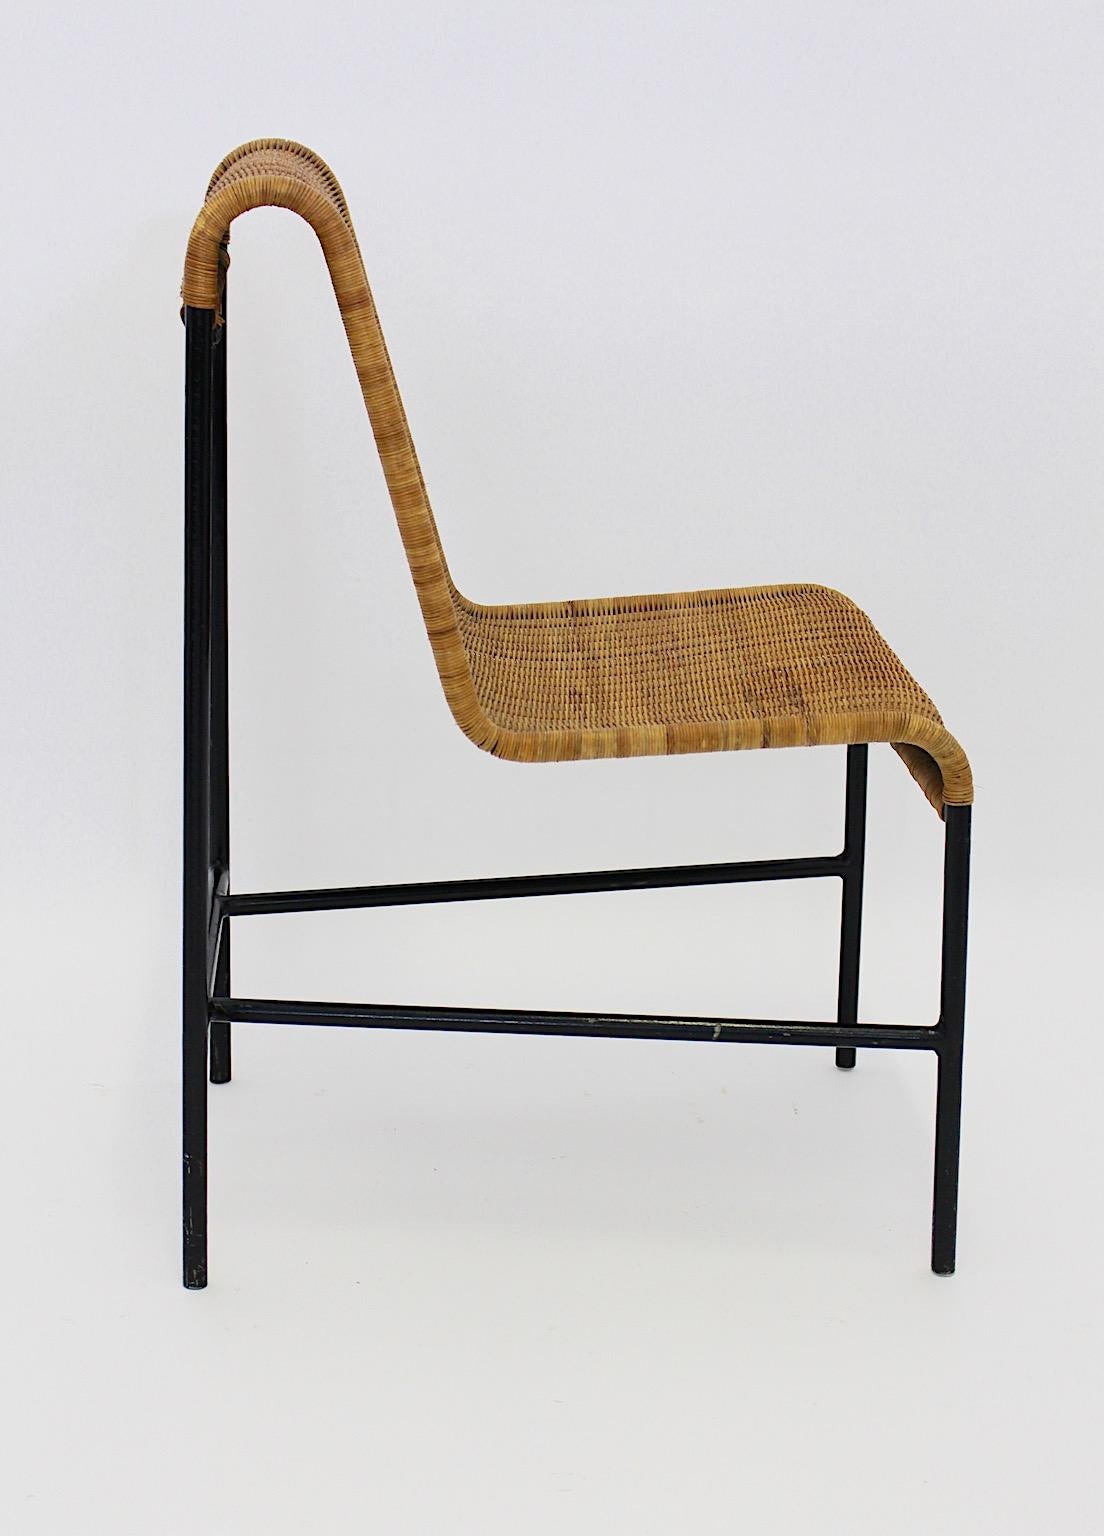 Lacquered Organic Moder Mid Century Modern Vintage Chair Harold Cohen Davis Pratt 1953 USA For Sale